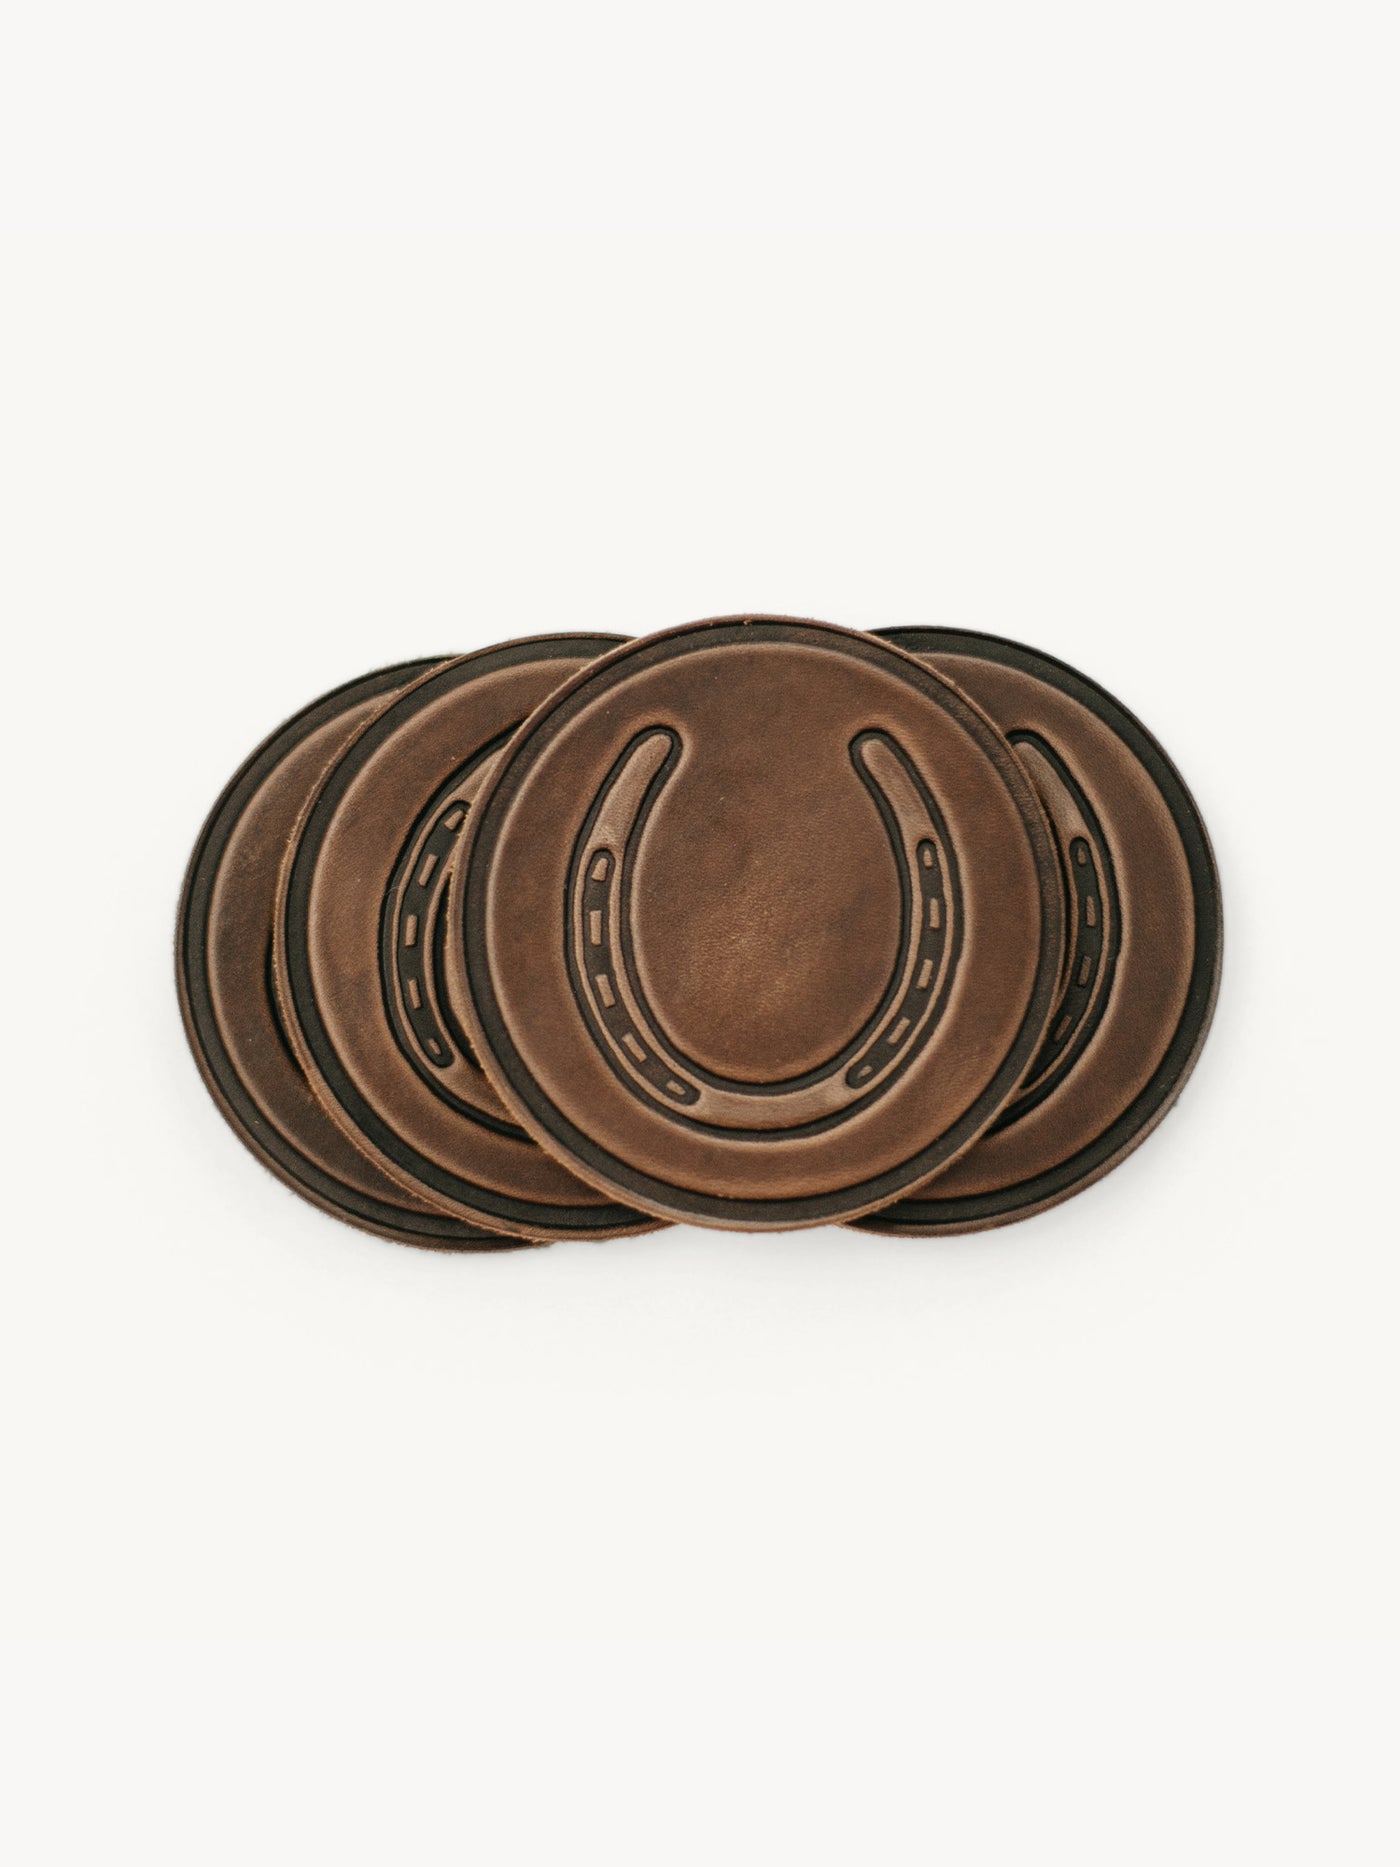 Leather Horseshoe Coasters Set of 4 | Best & USA Made | Col Littleton